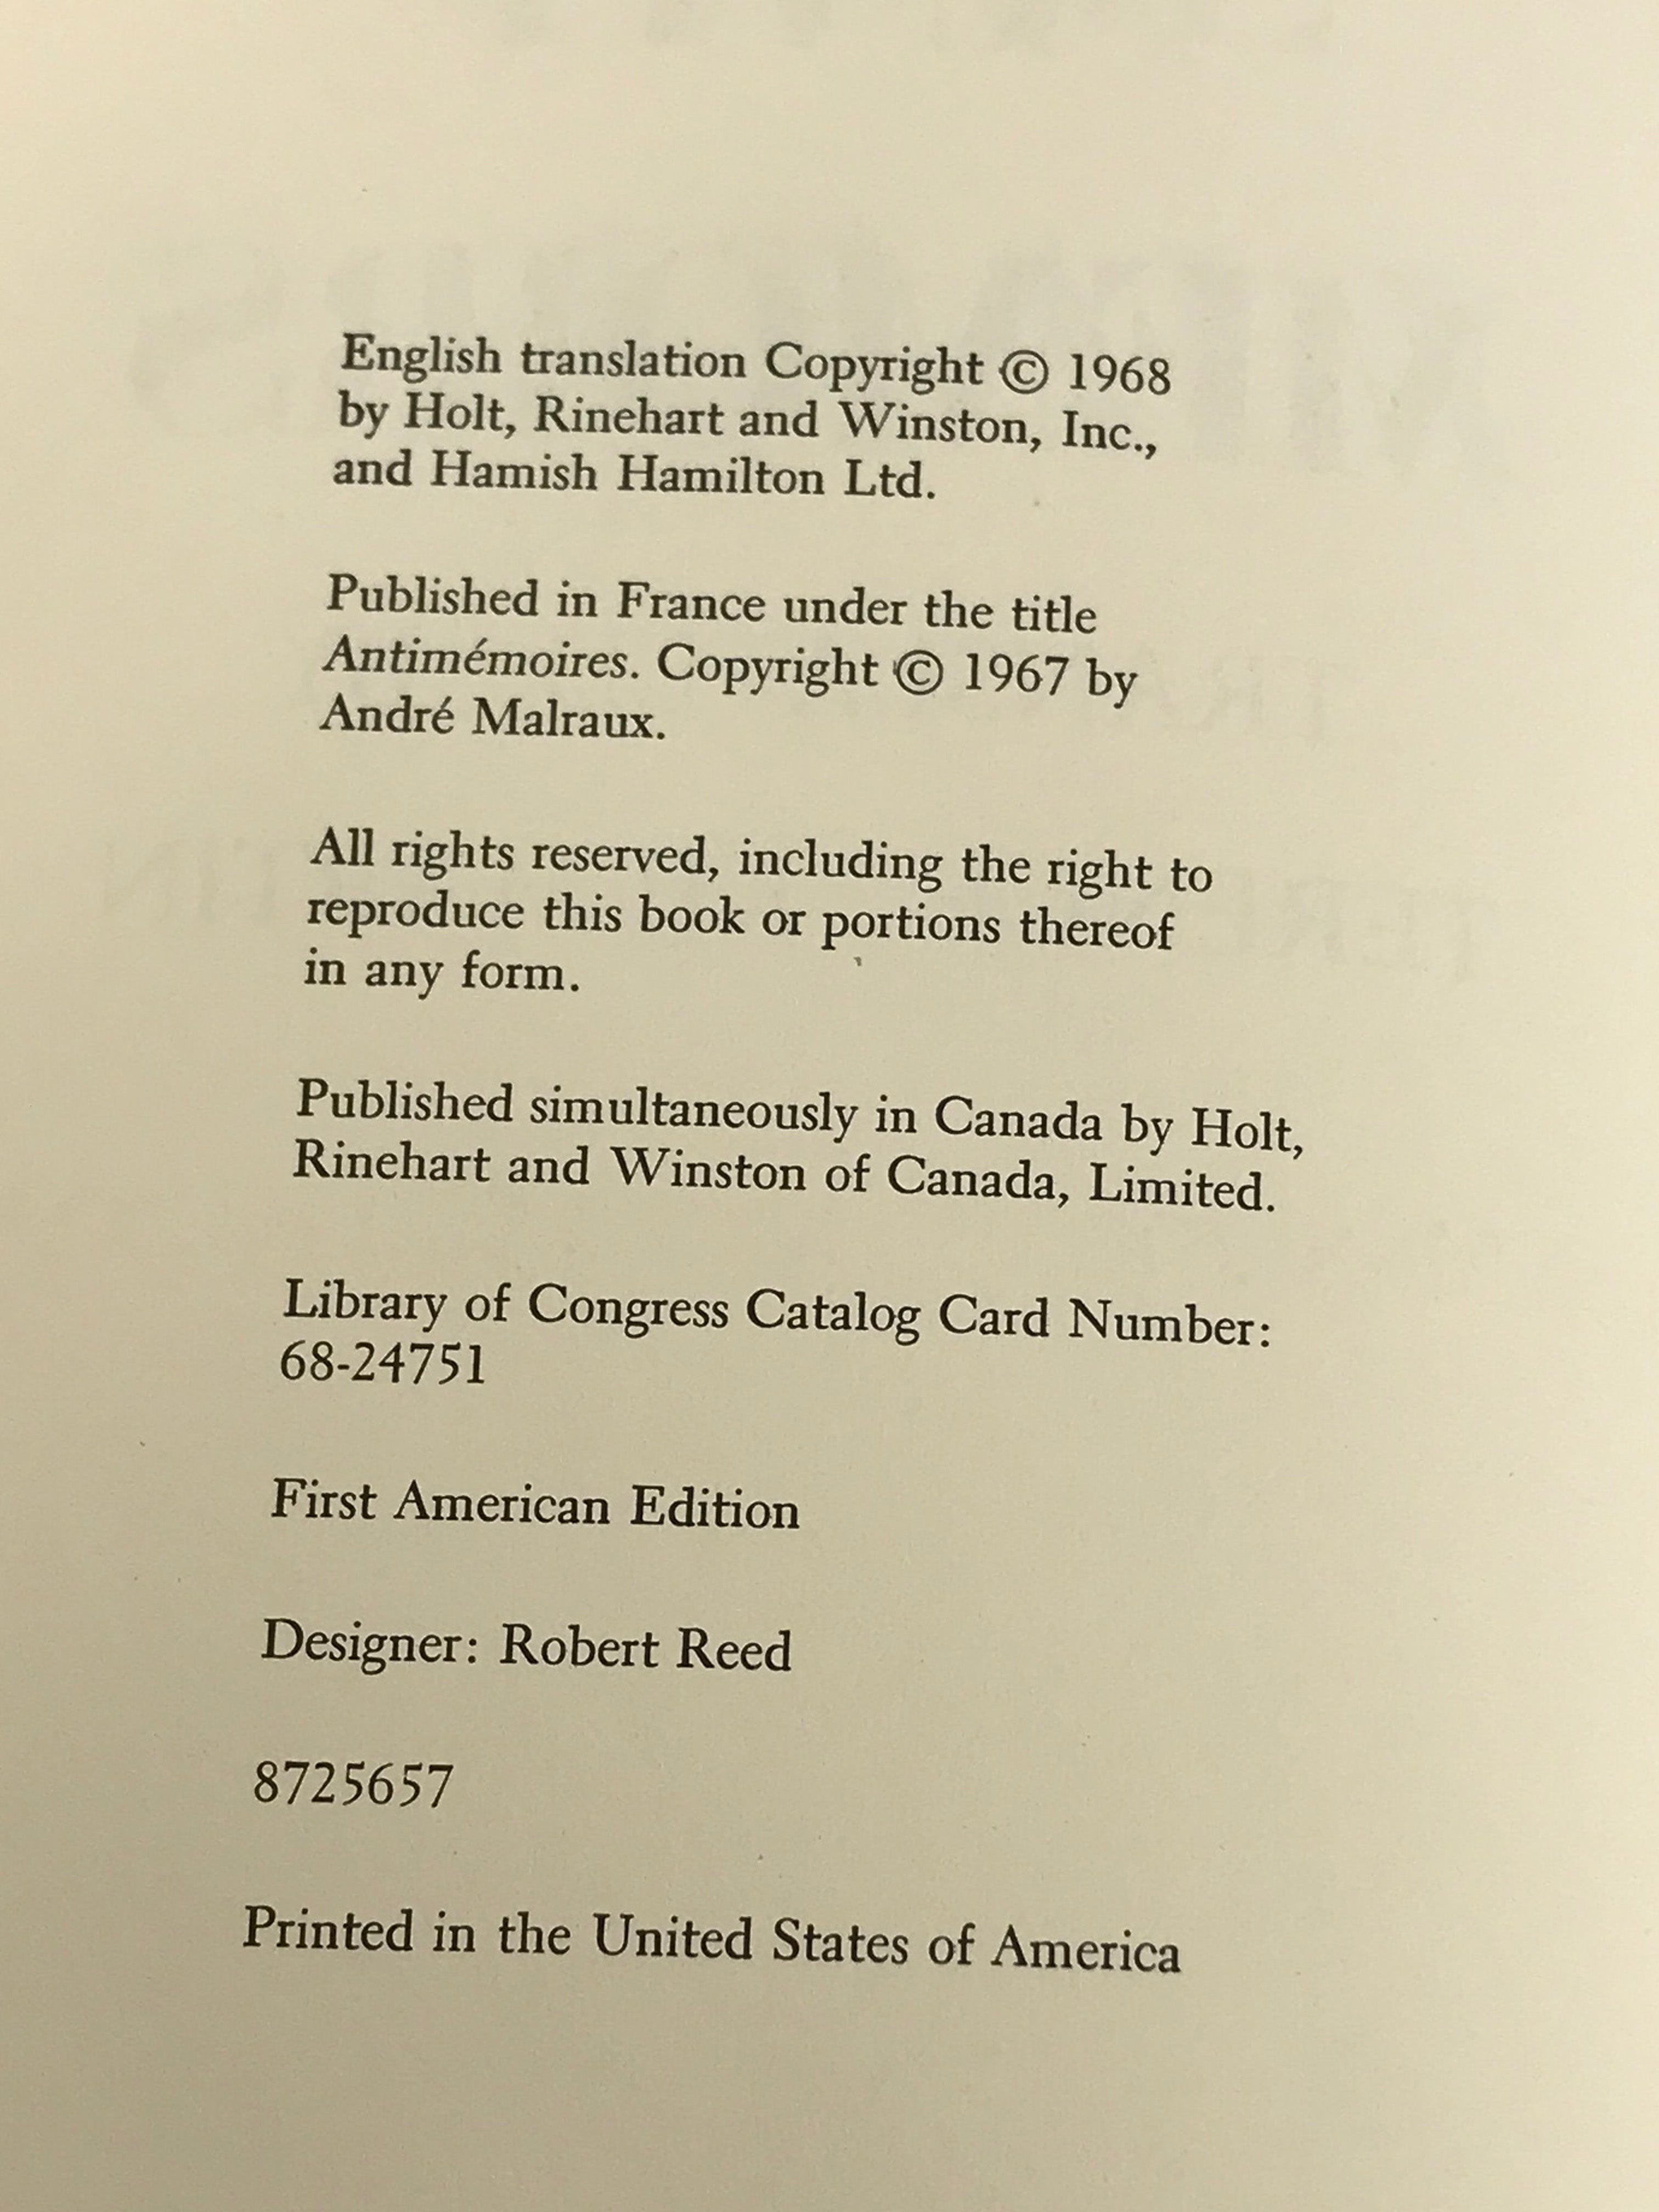 Andre Malraux Anti-Memoirs First American Edition 1968 HC DJ